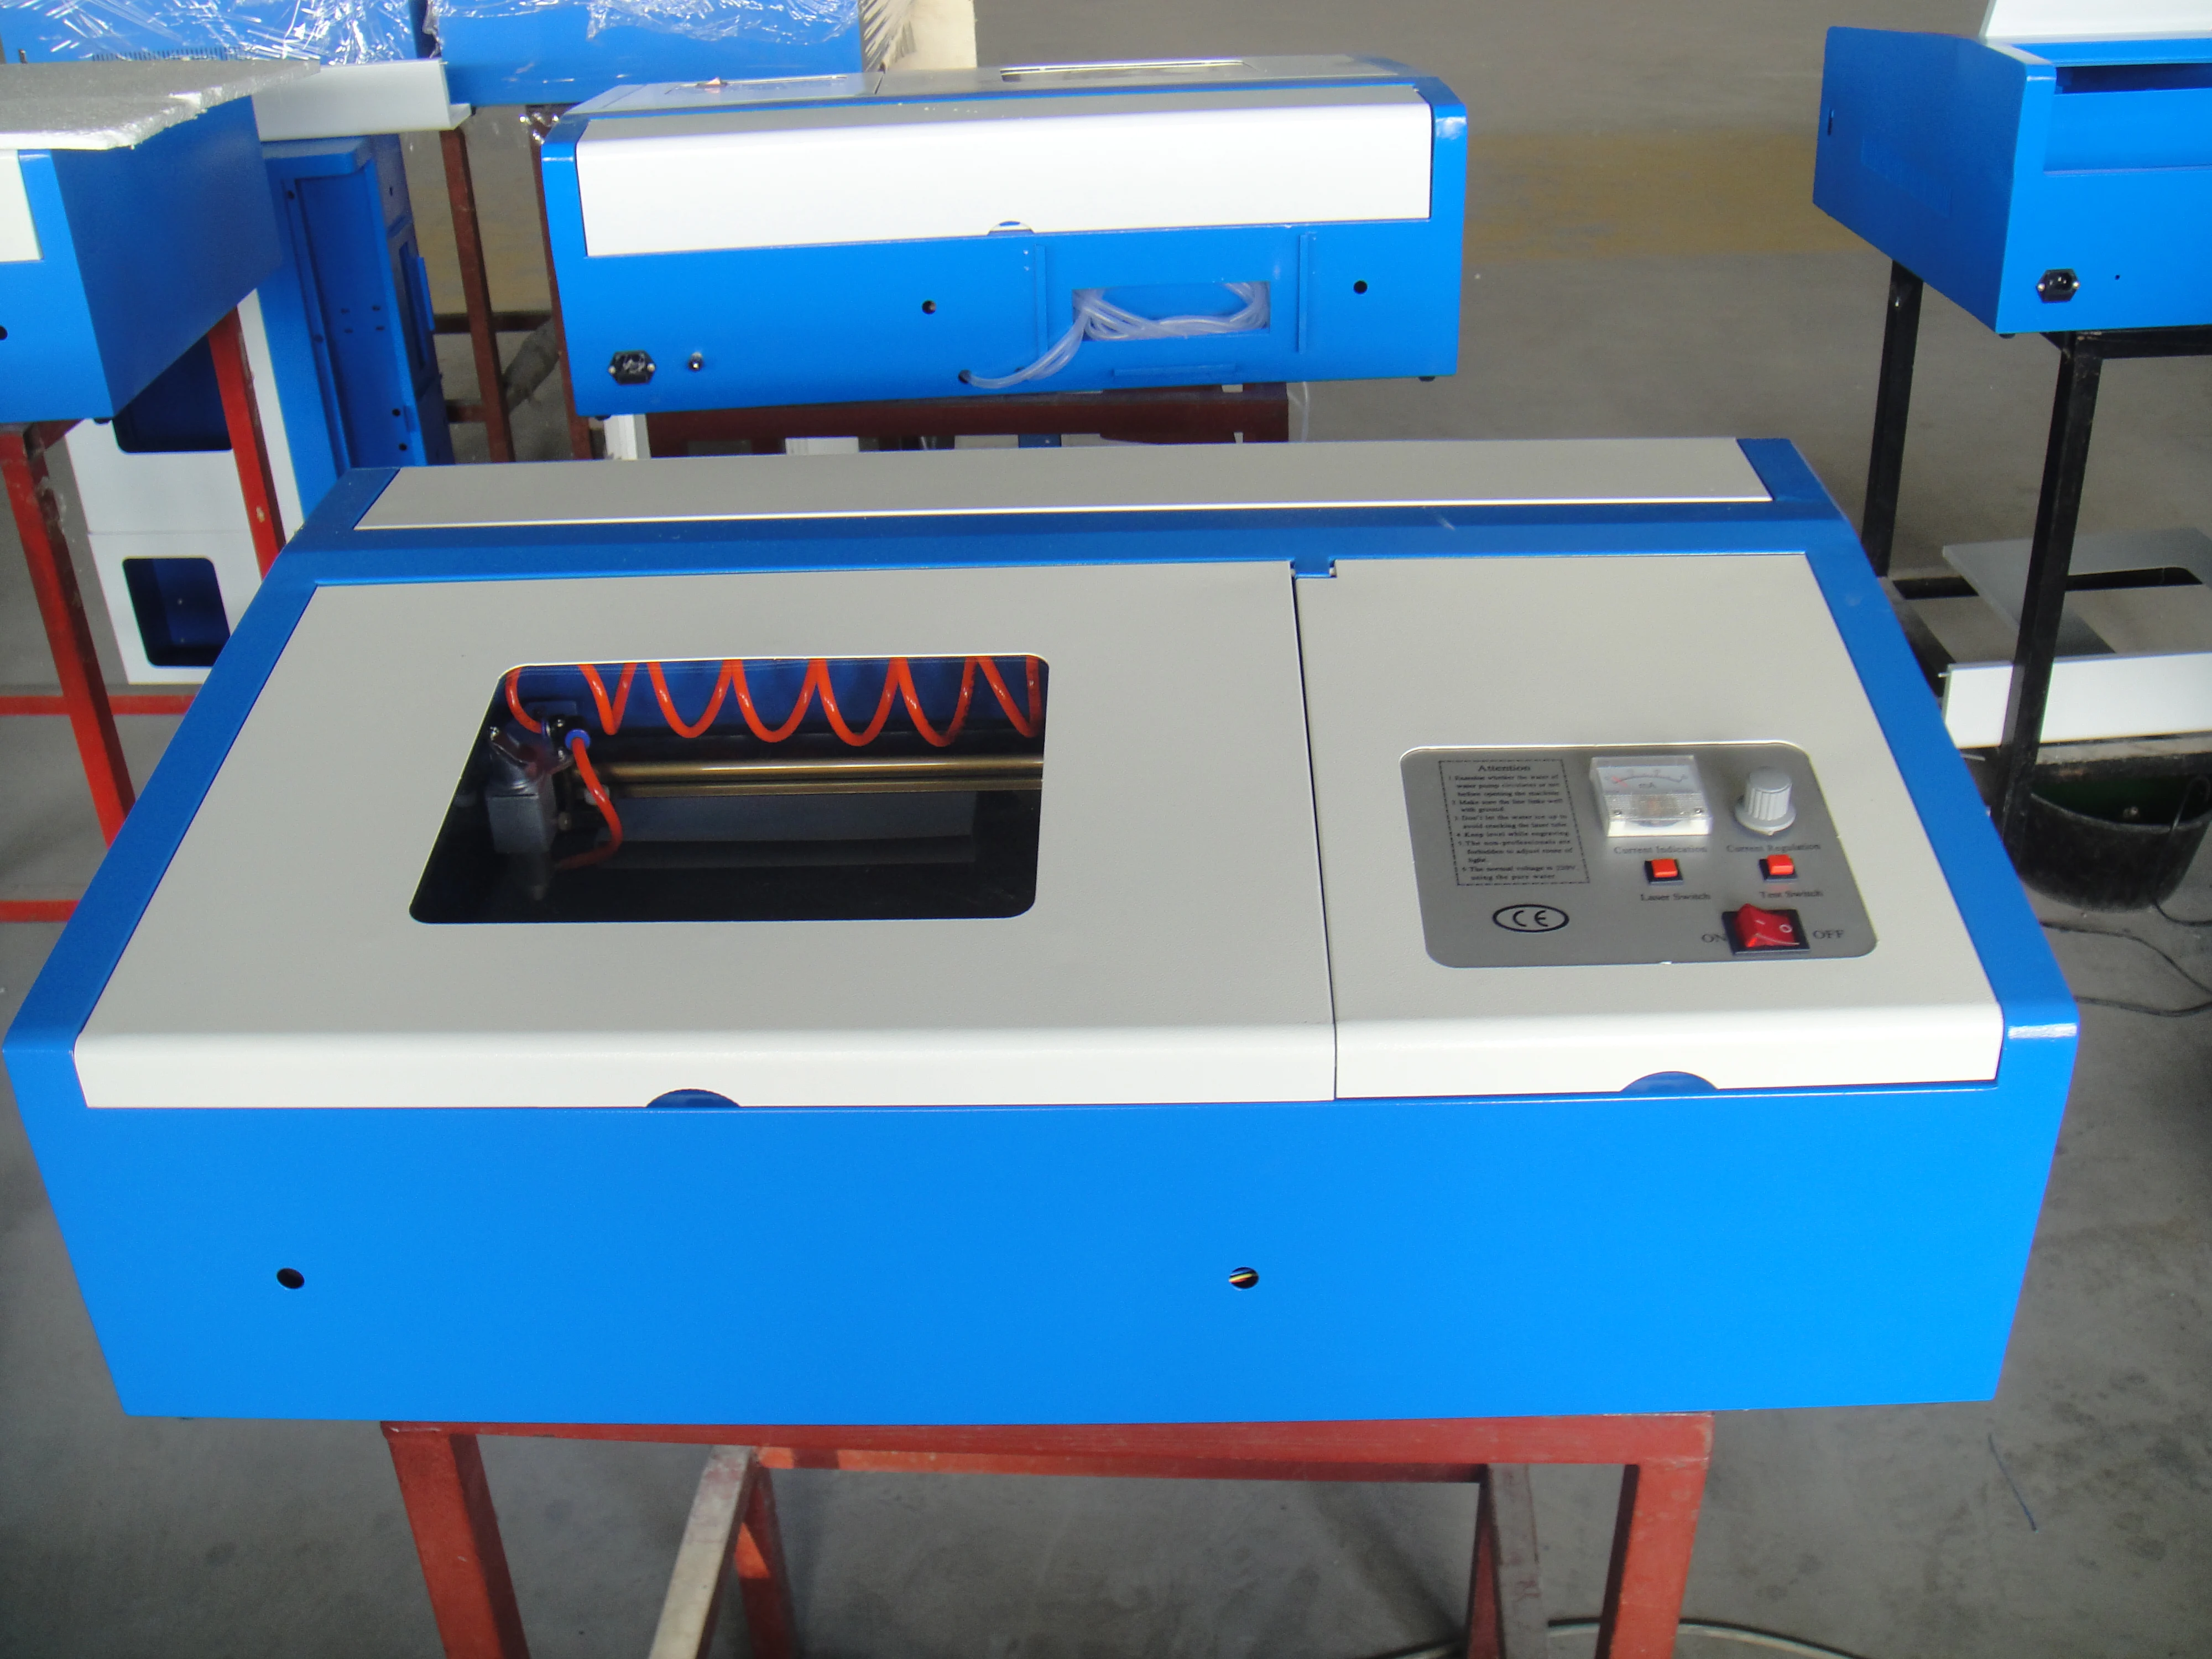 2022 K40 40W 200*300mm Portable CO2 Laser Engraver Cutter Engraving Machine 40W Laser Cutting Machine enlarge